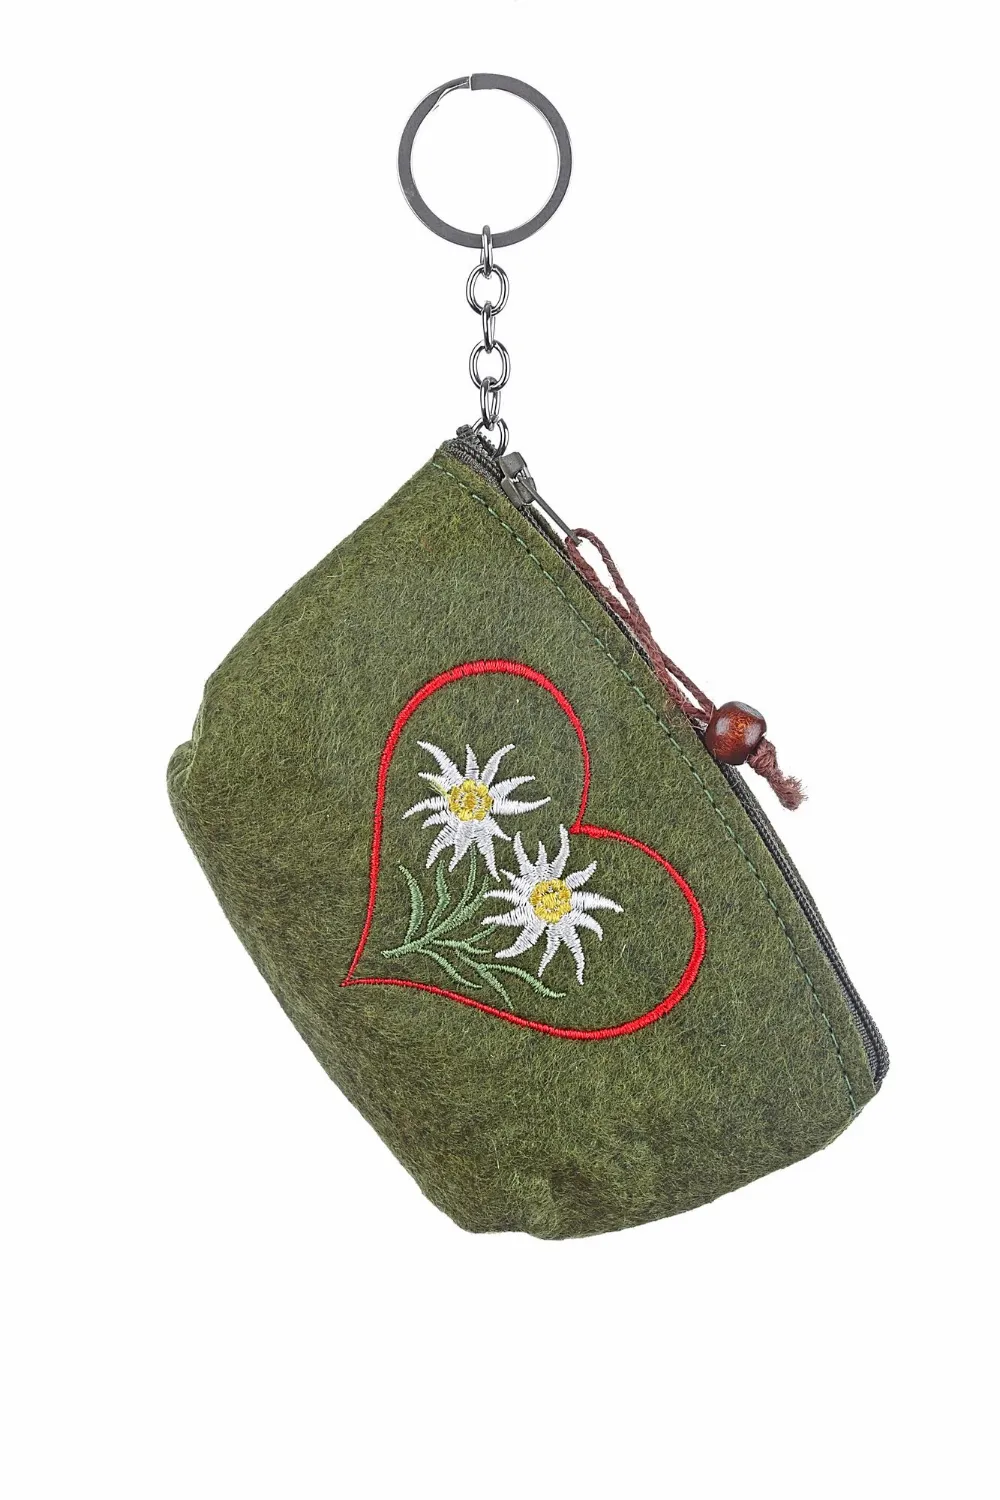 Embroidered logo Keychain green customkeychains